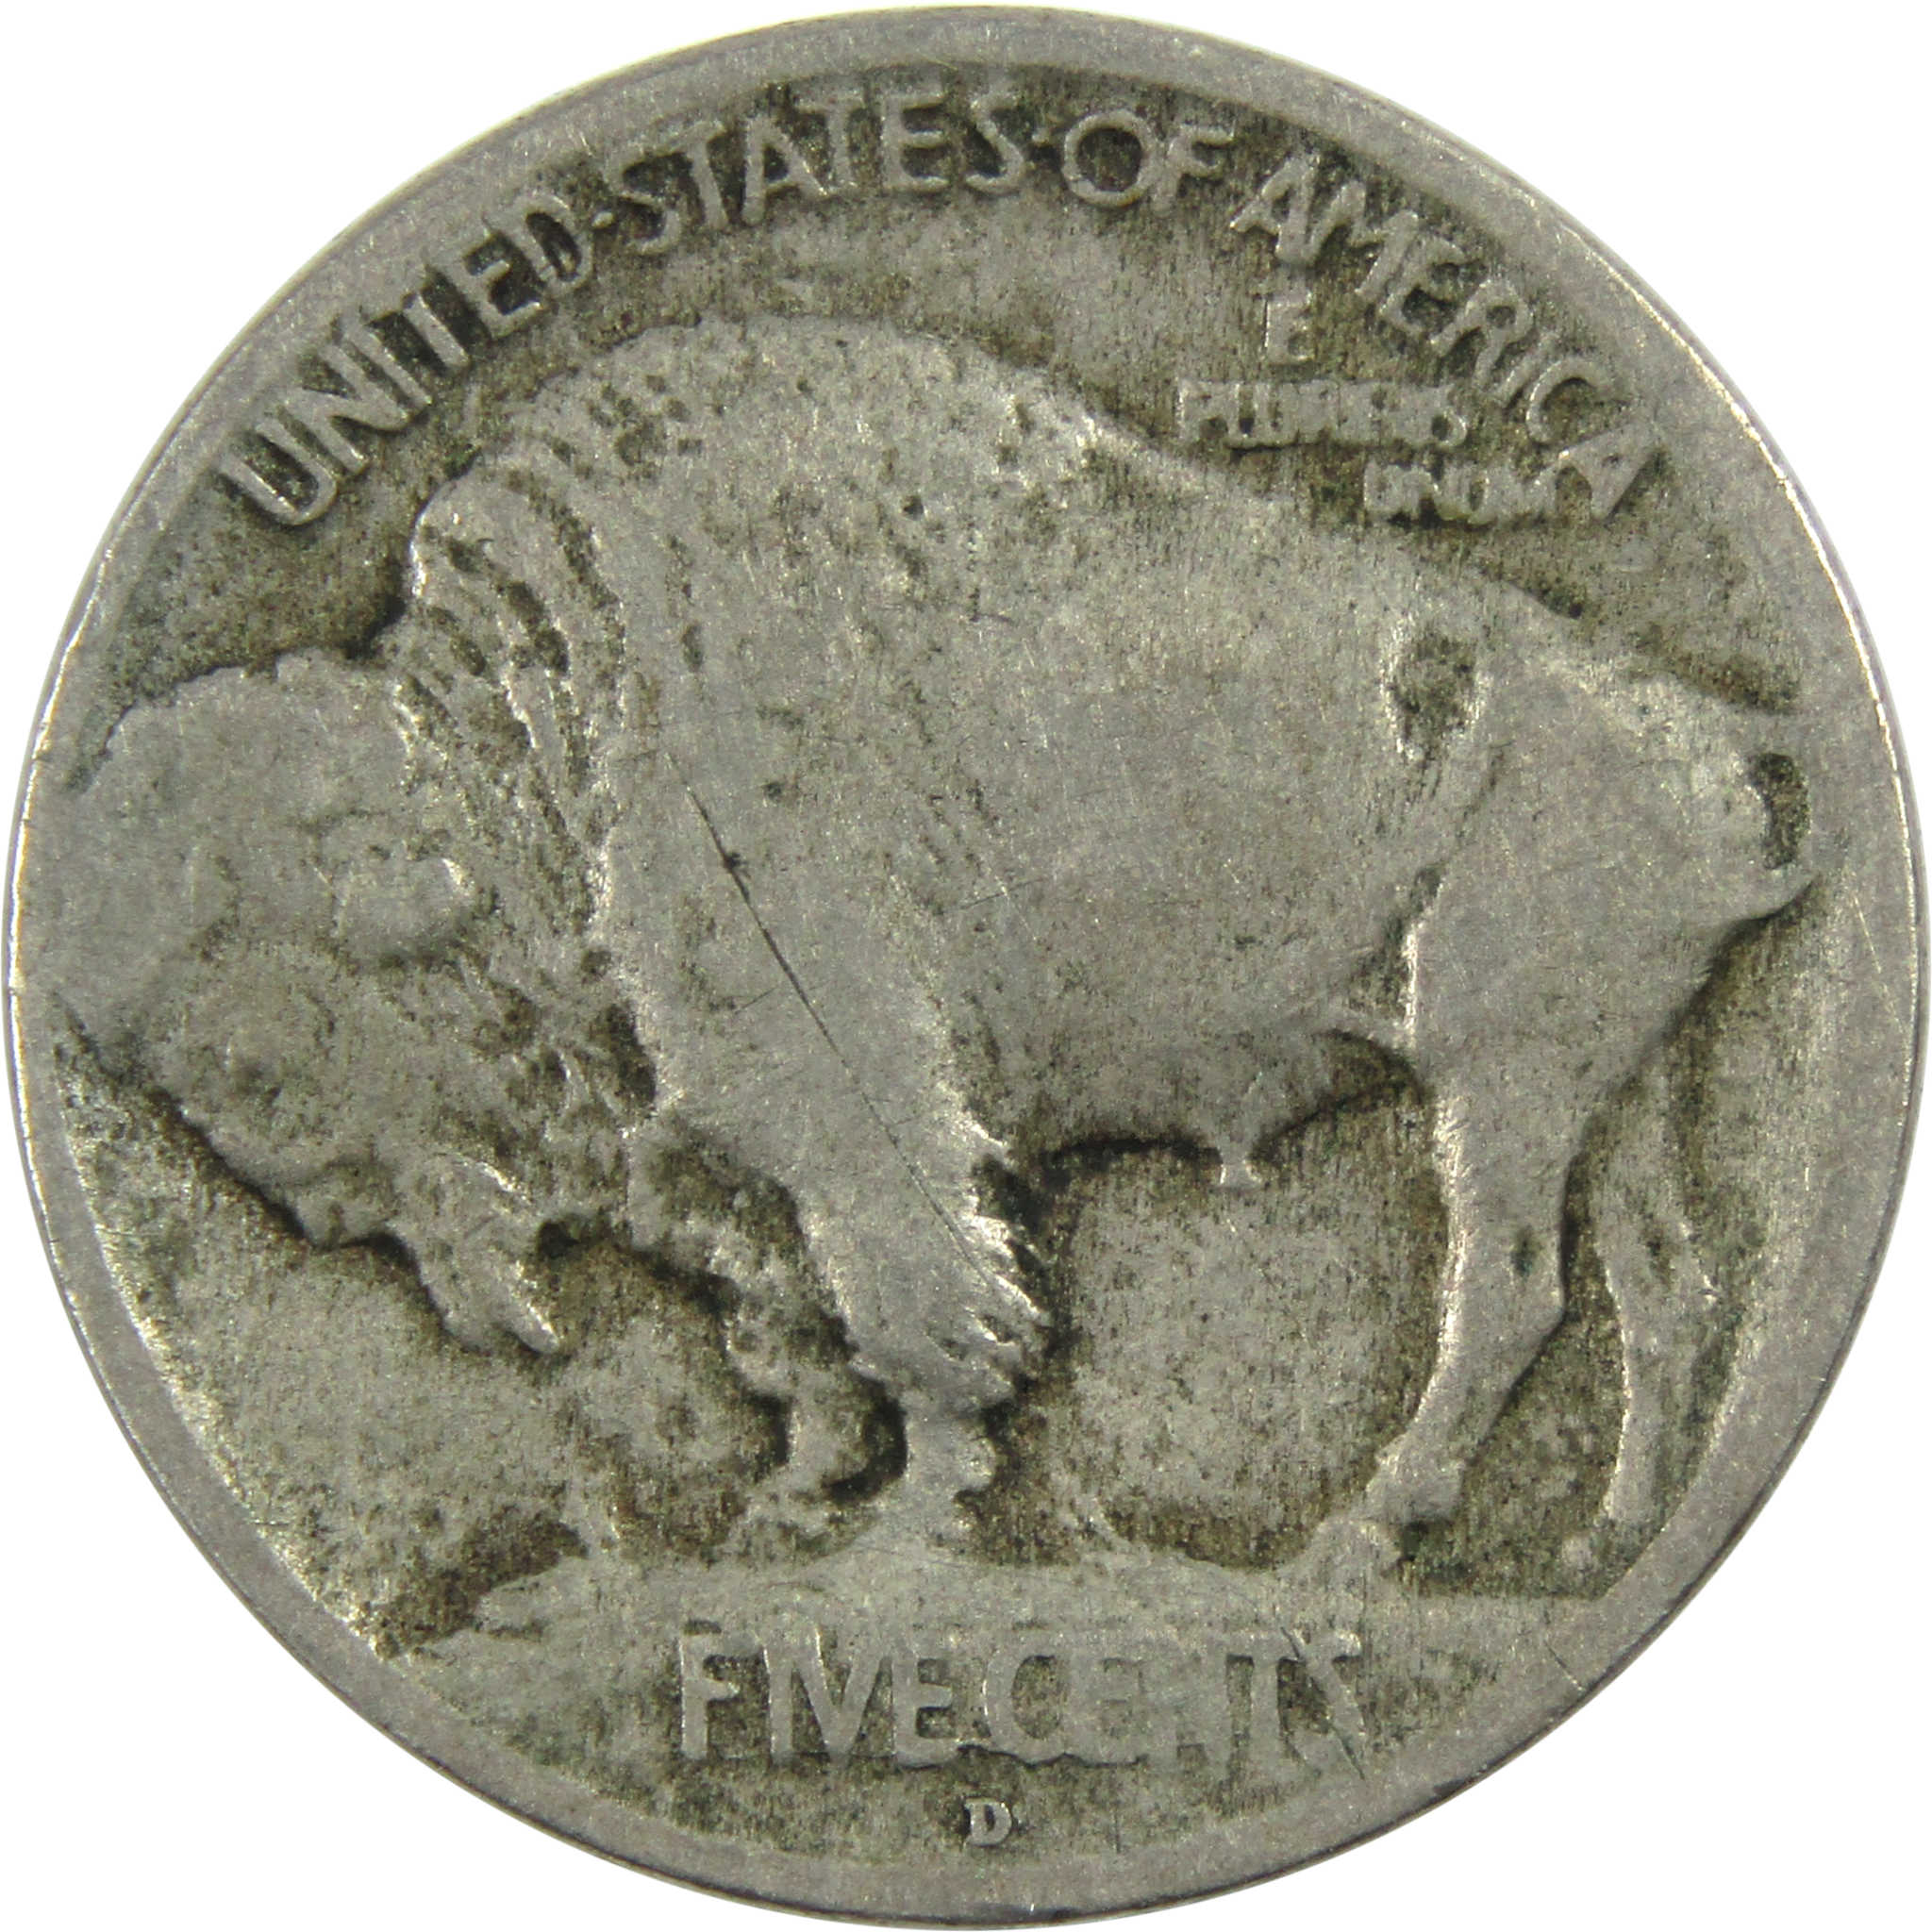 1913 D Type 1 Indian Head Buffalo Nickel Very Good Details SKU:I13002